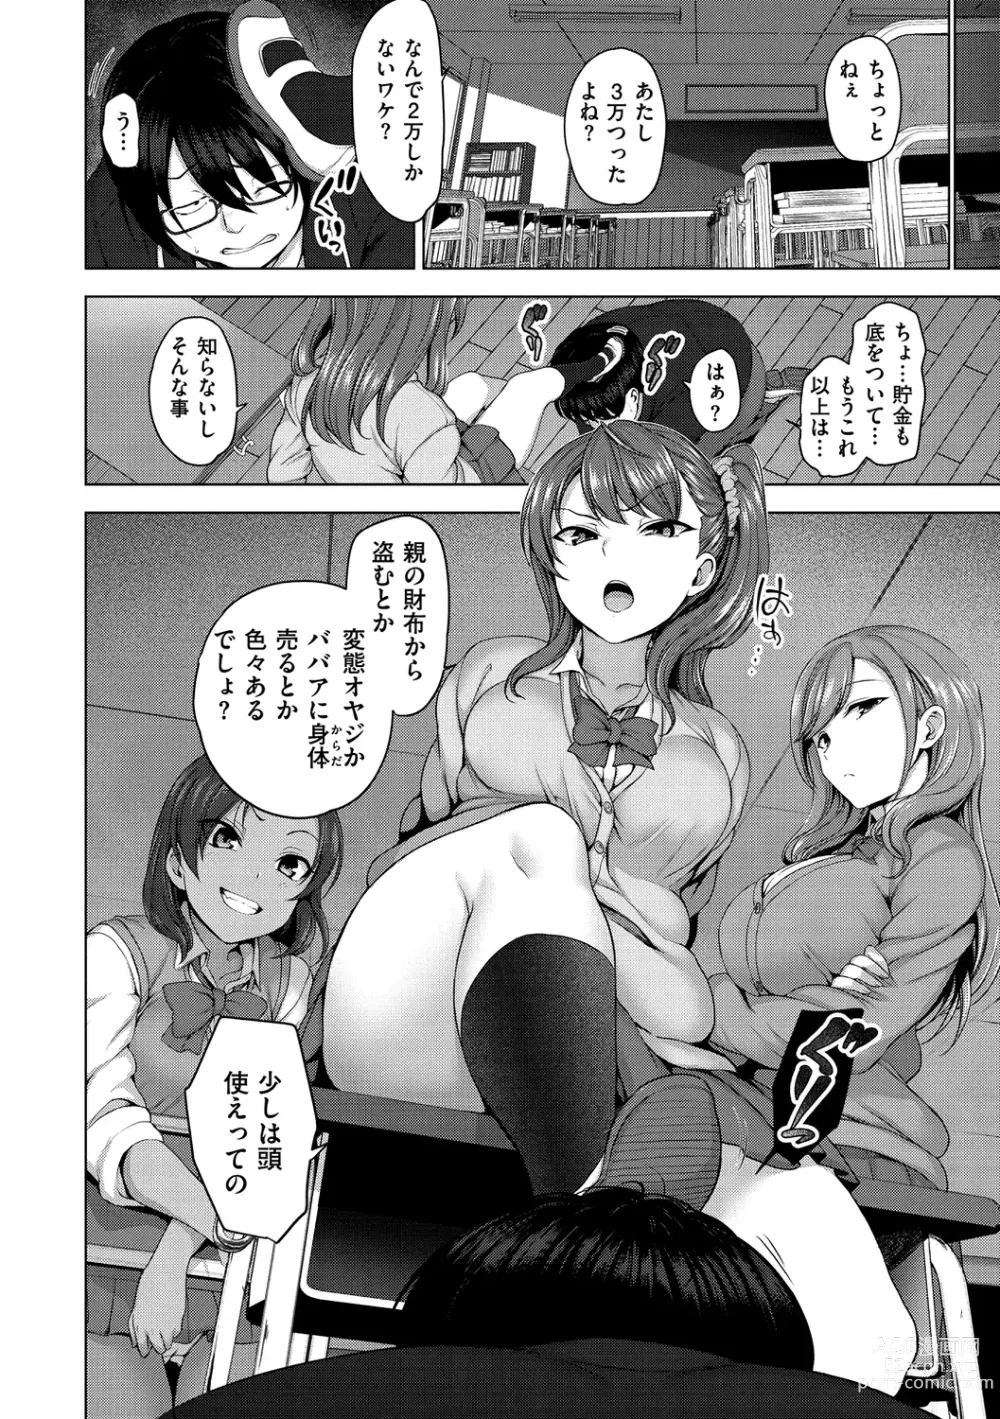 Page 6 of manga Ijirare